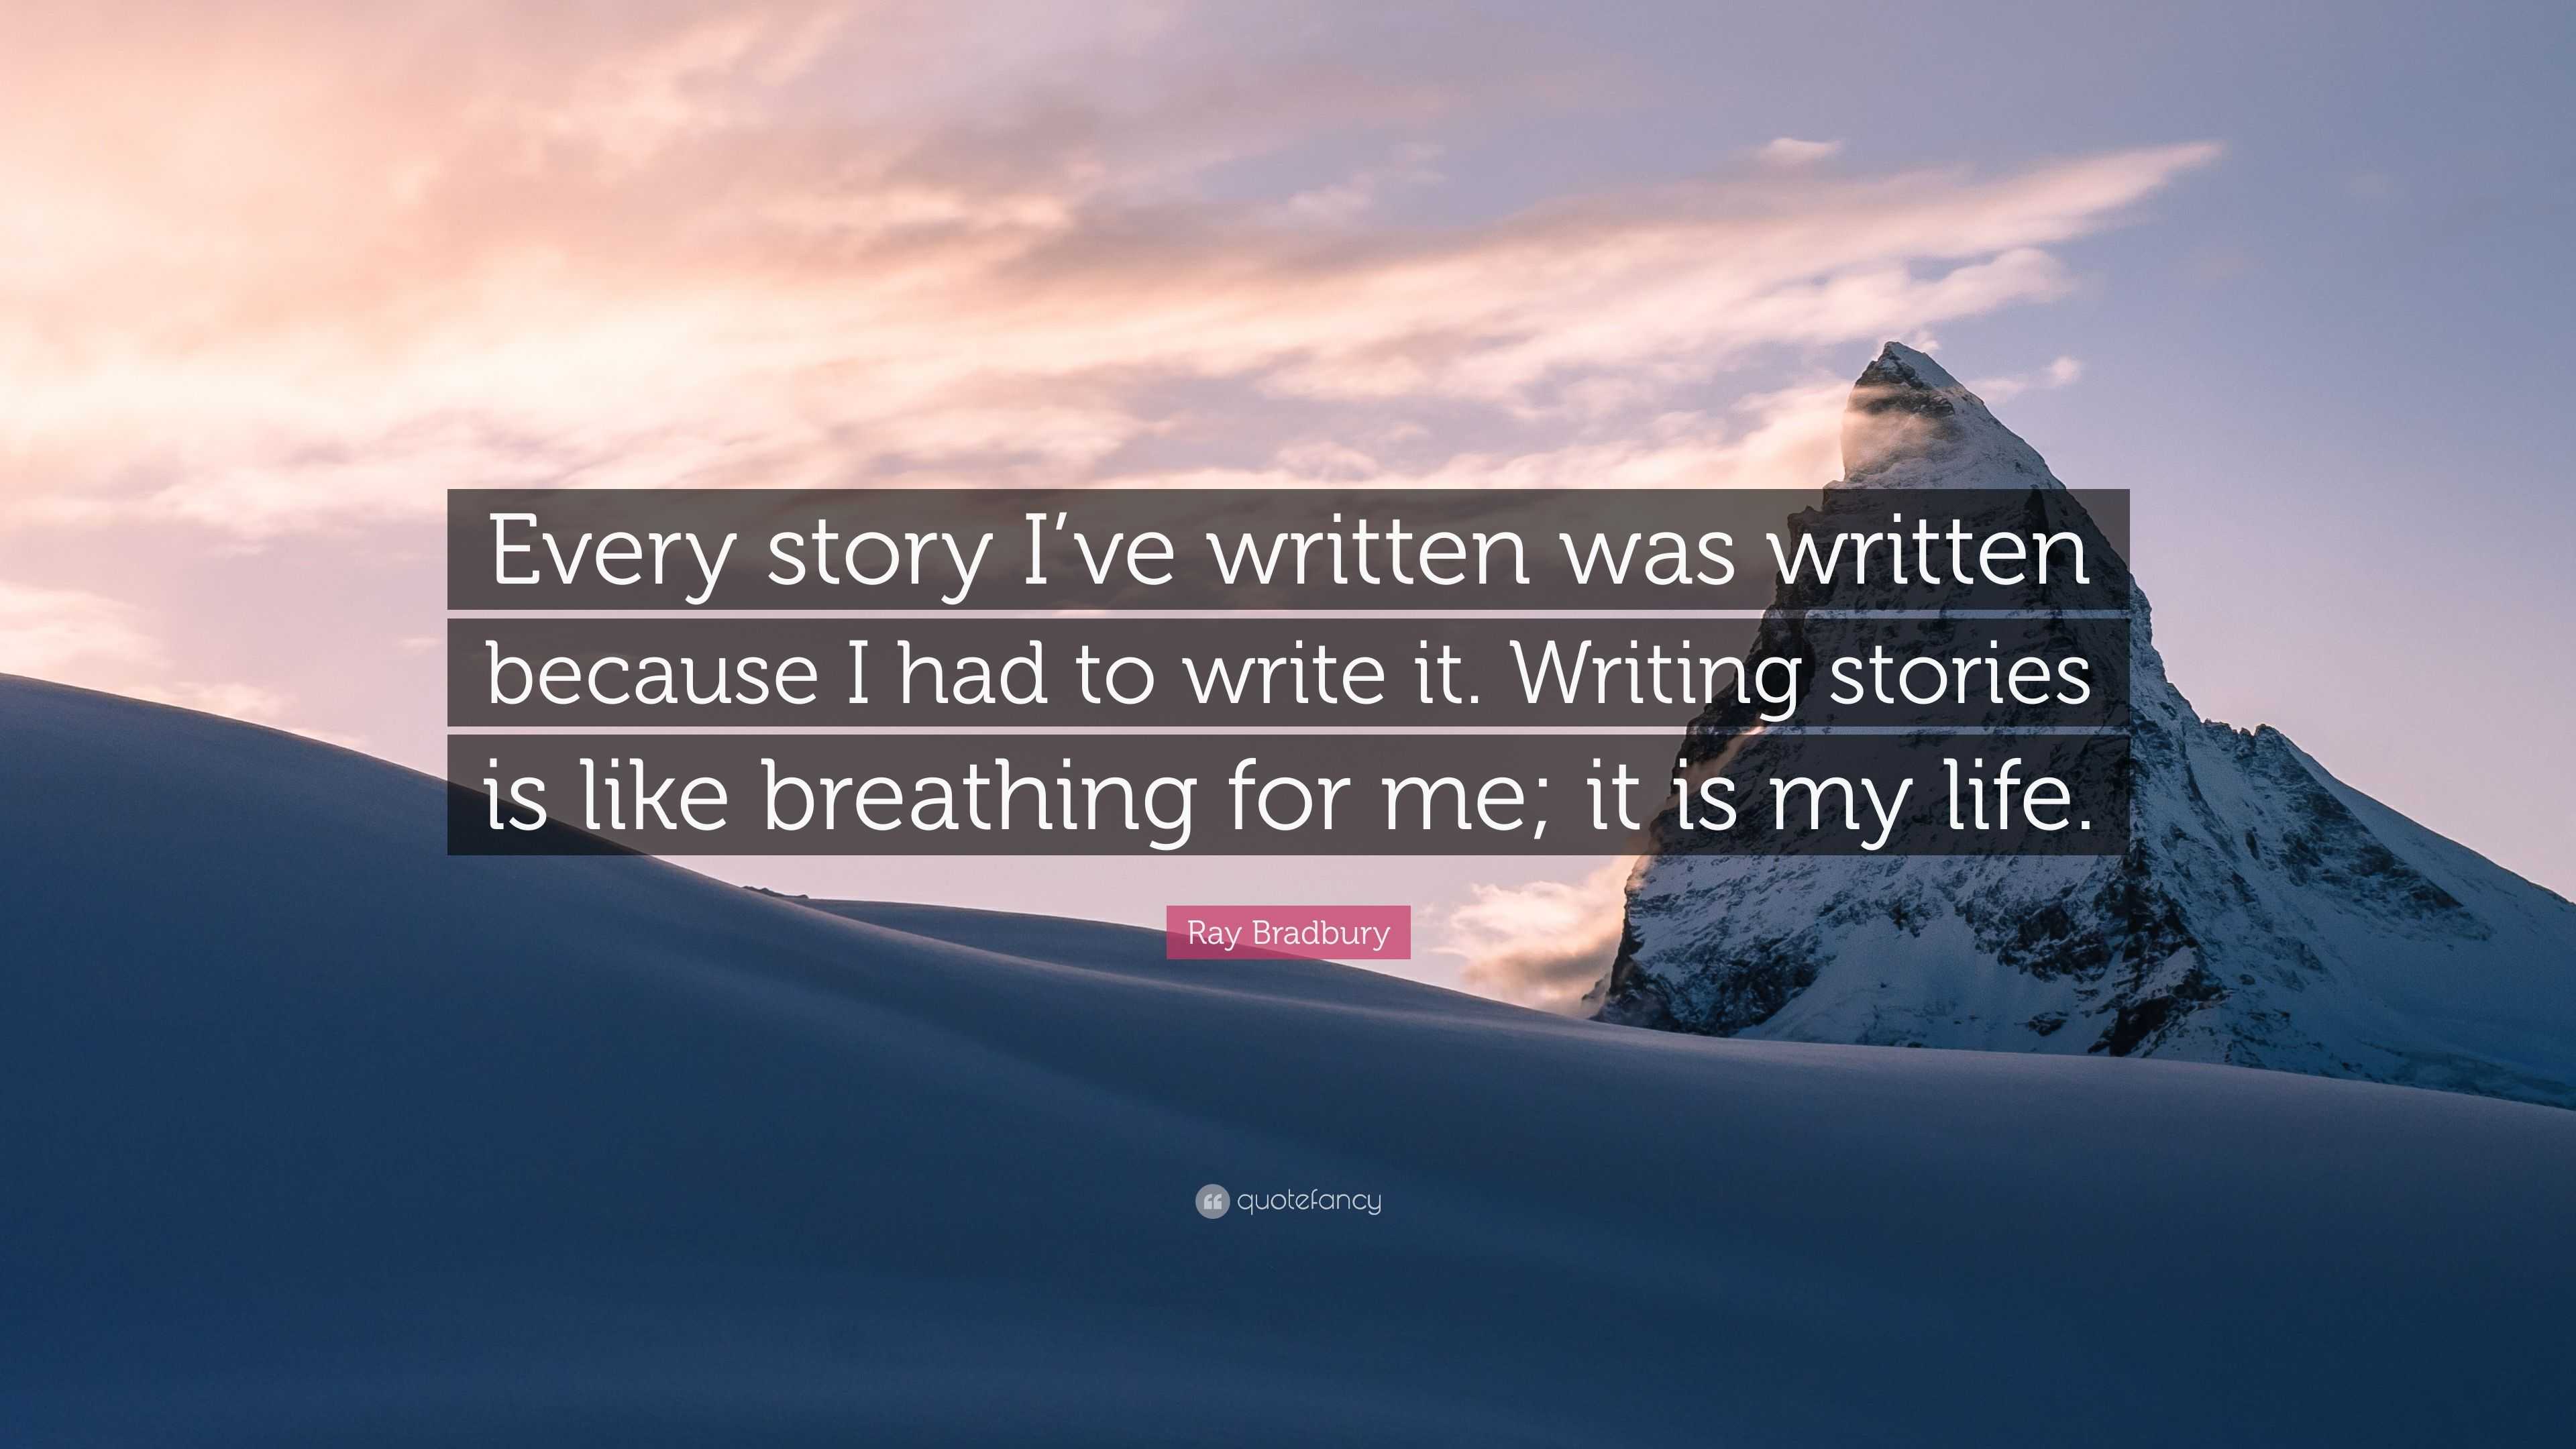 Ray Bradbury Quote “Every story I ve written was written because I had